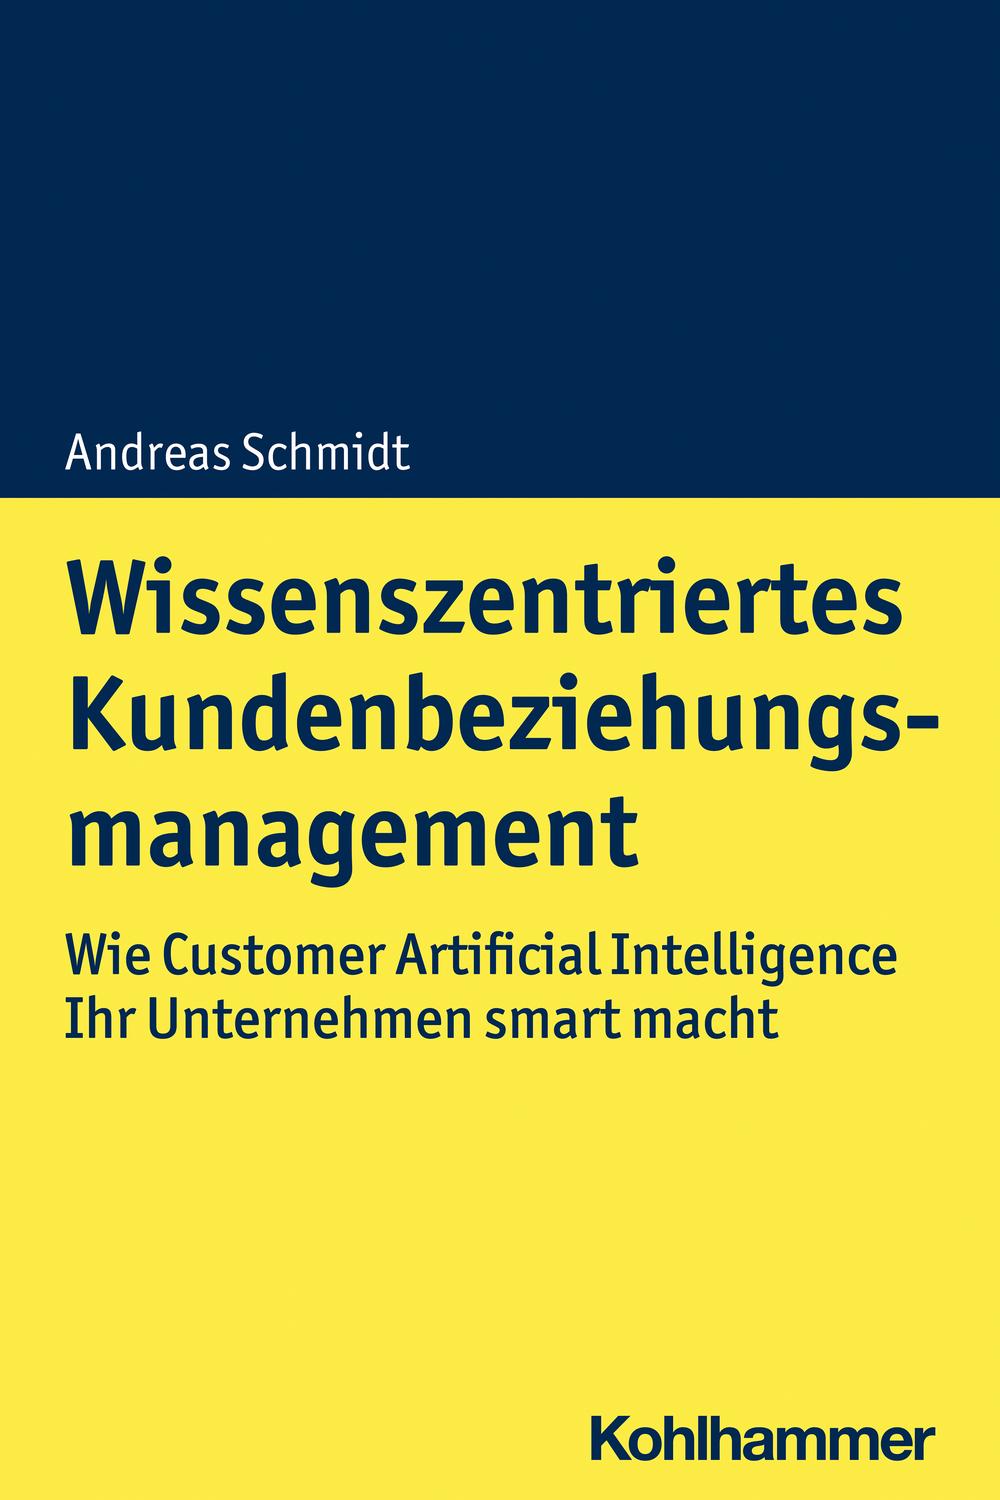 Wissenszentriertes Kundenbeziehungsmanagement - Andreas Schmidt